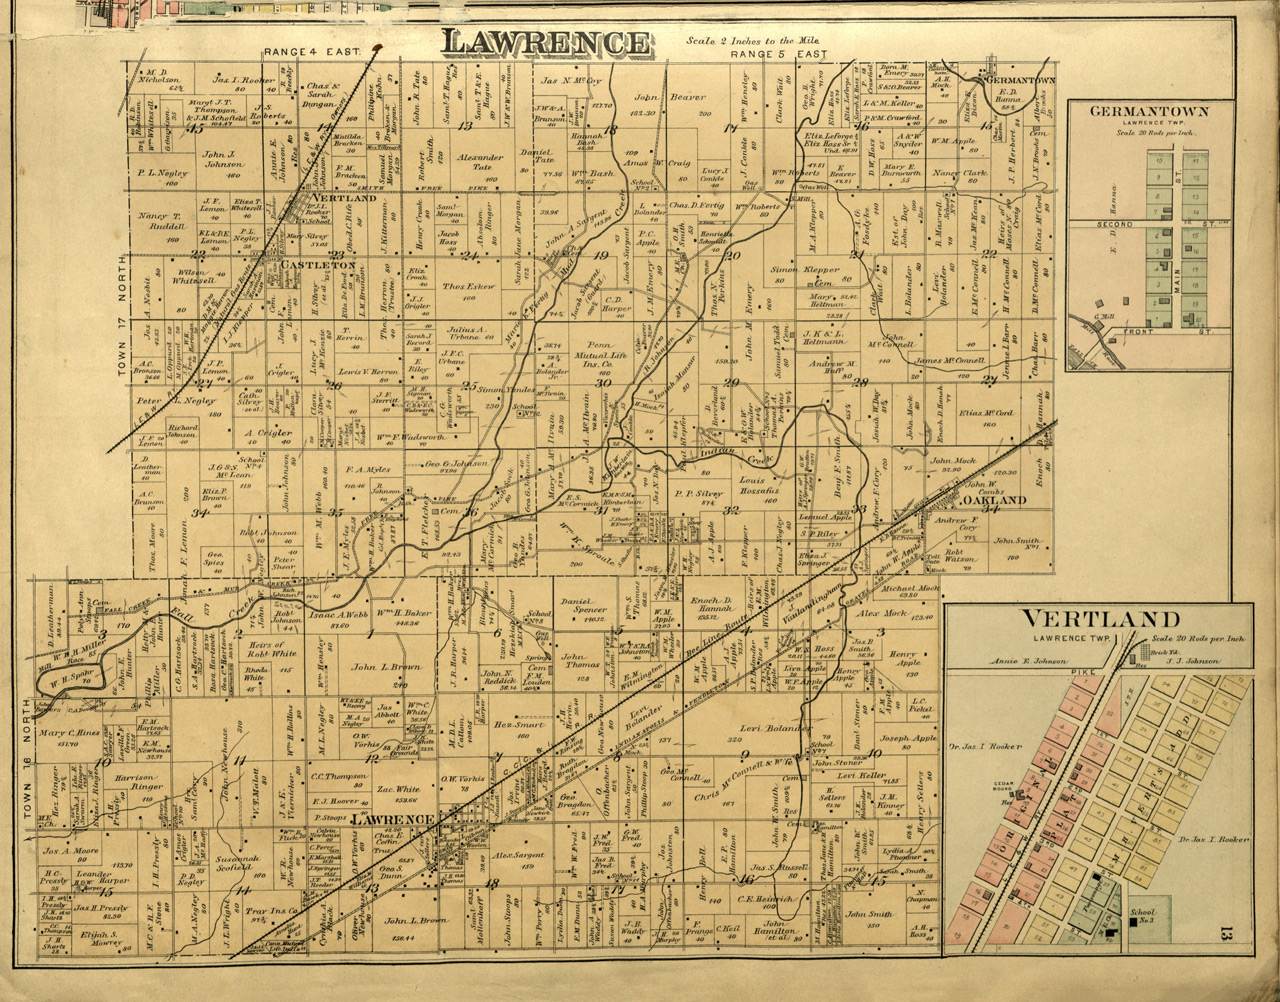 Lawrence Township Germantown and Vertland